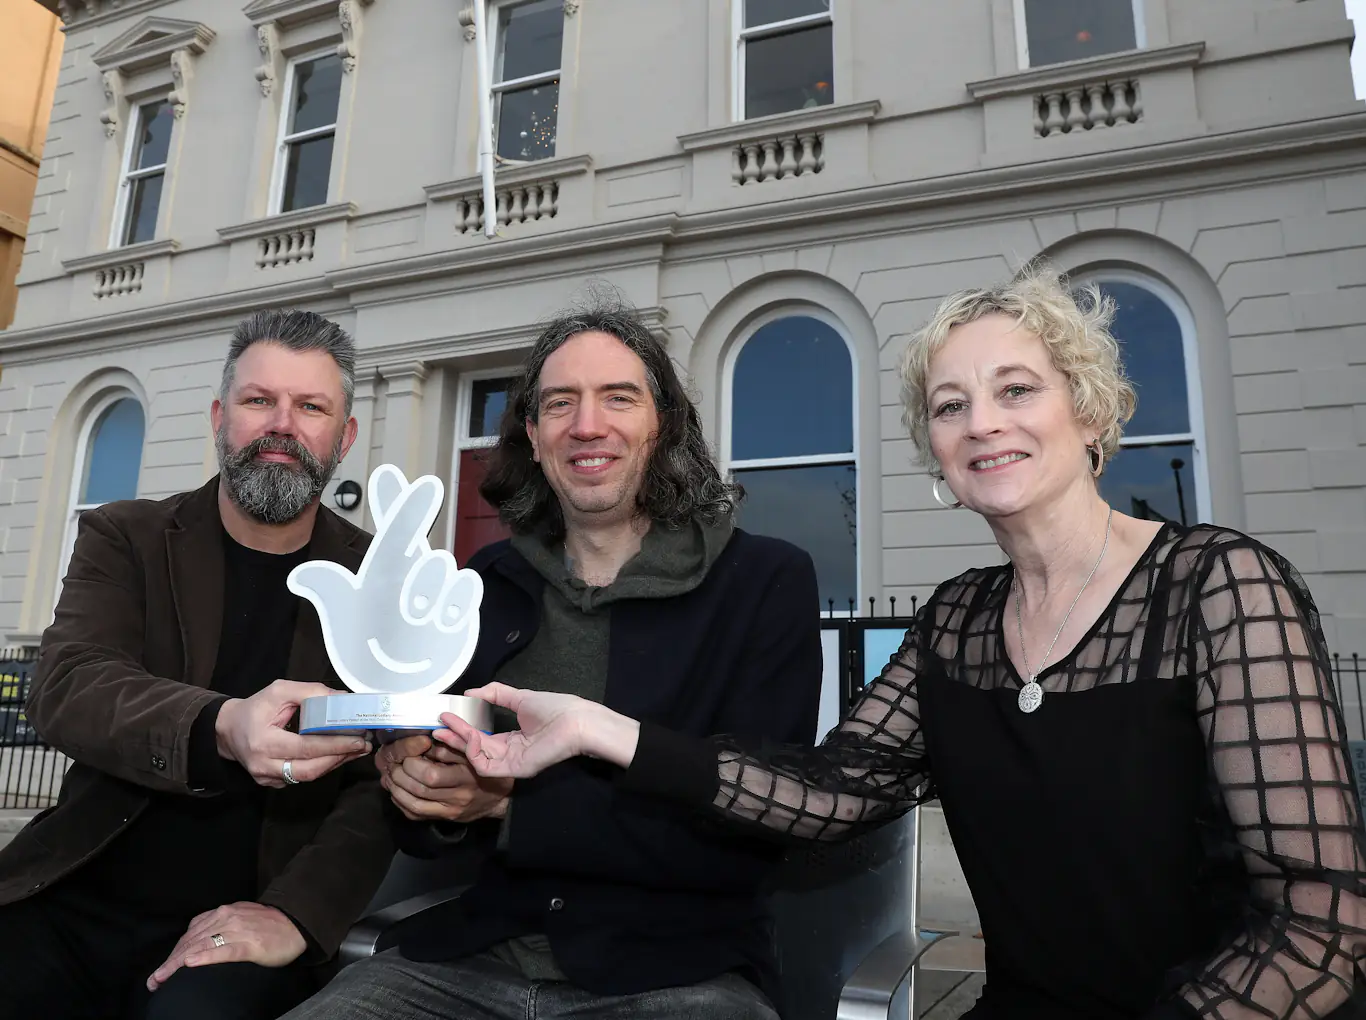 Snow Patrol frontman Gary Lightbody honours Bangor Court House with major award